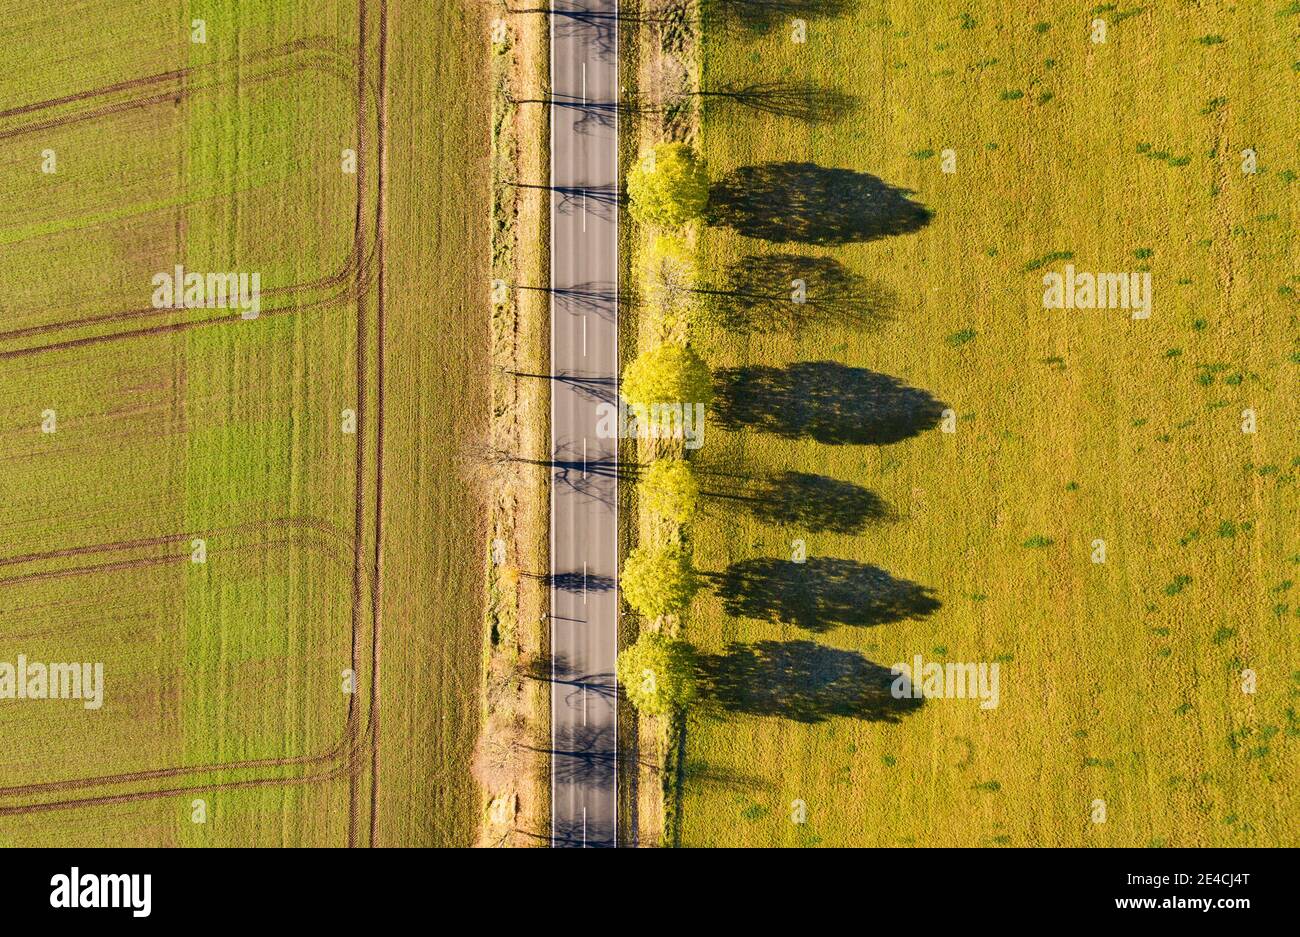 Allemagne, Thuringe, Großbreitenbach, Willmersdorf, rue, champs, arbres, ombres d'arbres, sidelight, vue de dessus, vue aérienne Banque D'Images